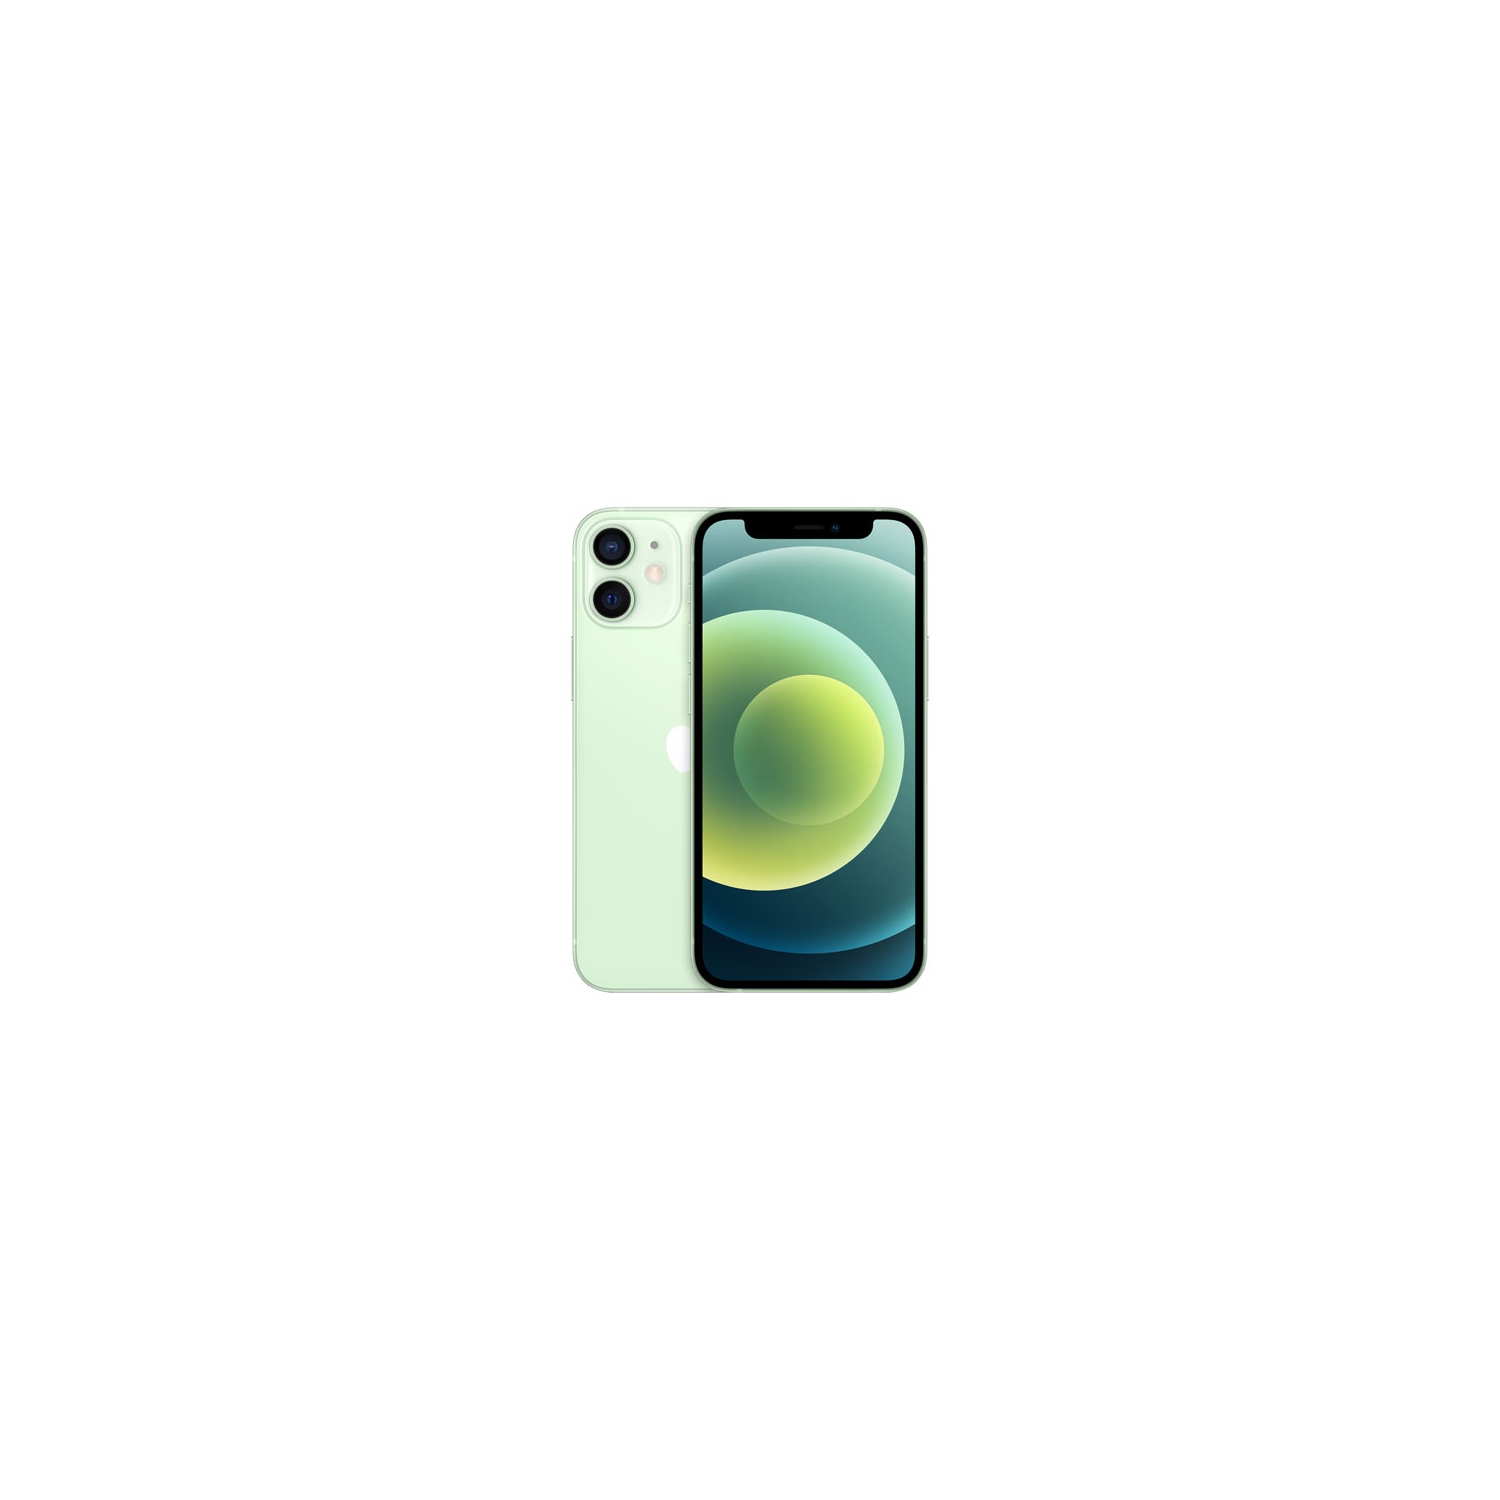 Refurbished (Excellent) - Apple iPhone 12 mini 64GB Smartphone - Green - Unlocked - Certified Refurbished